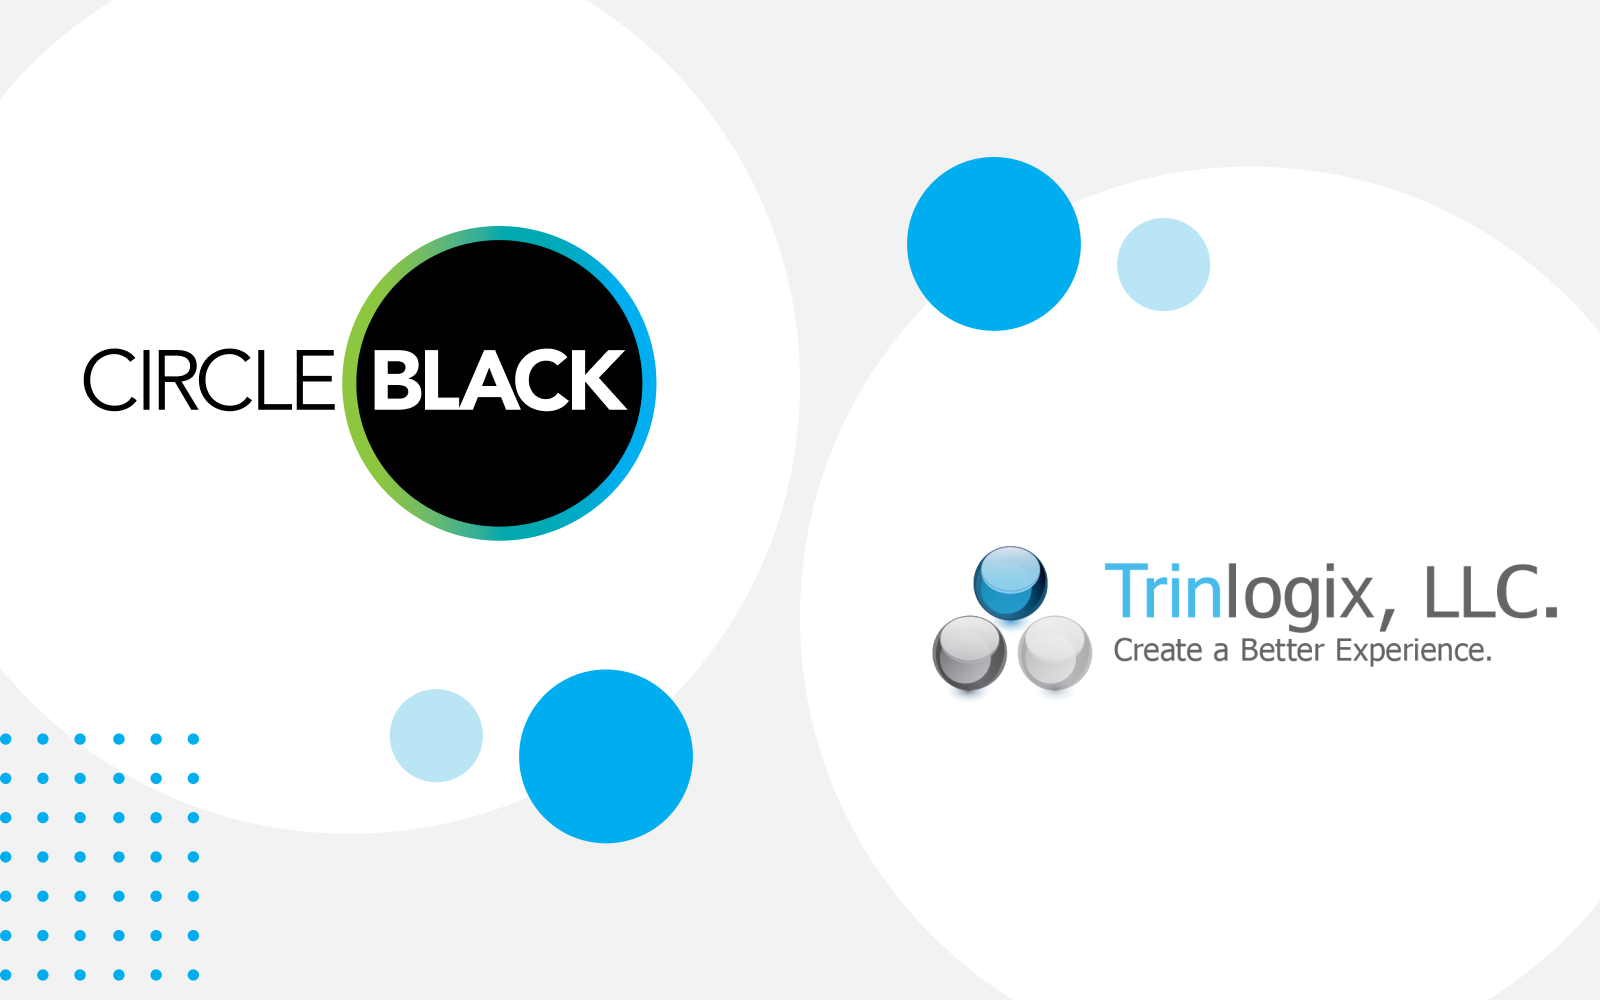 CircleBlack & Trinlogix logos